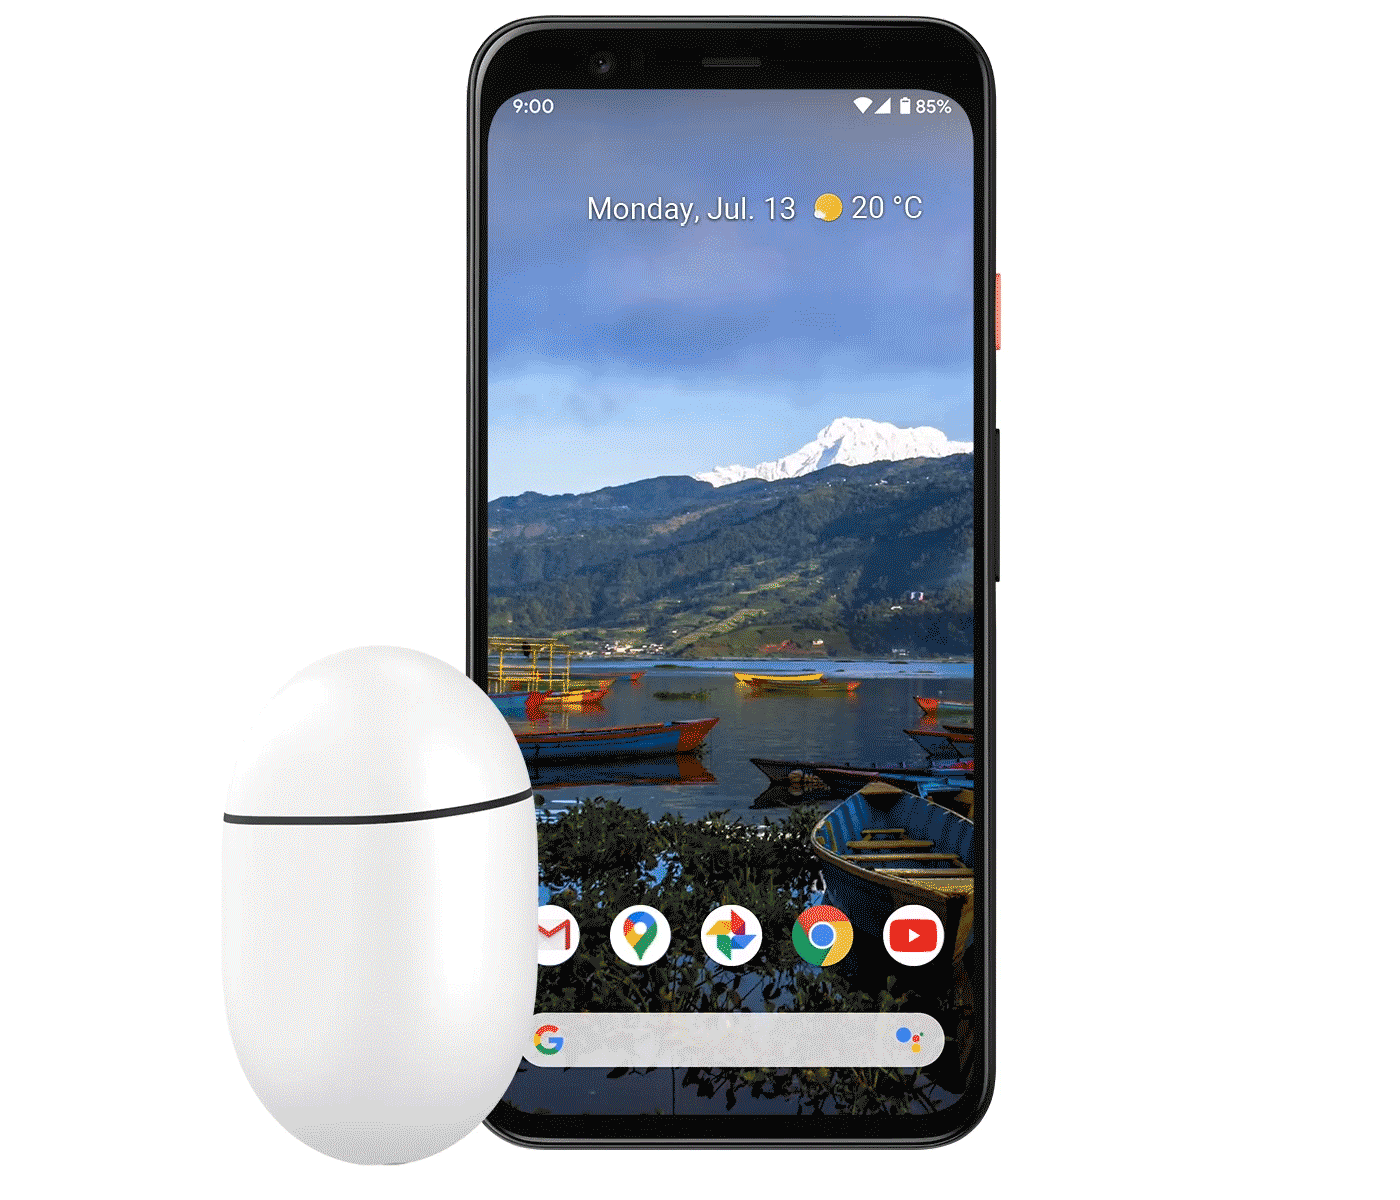 Google Pixel Buds 2